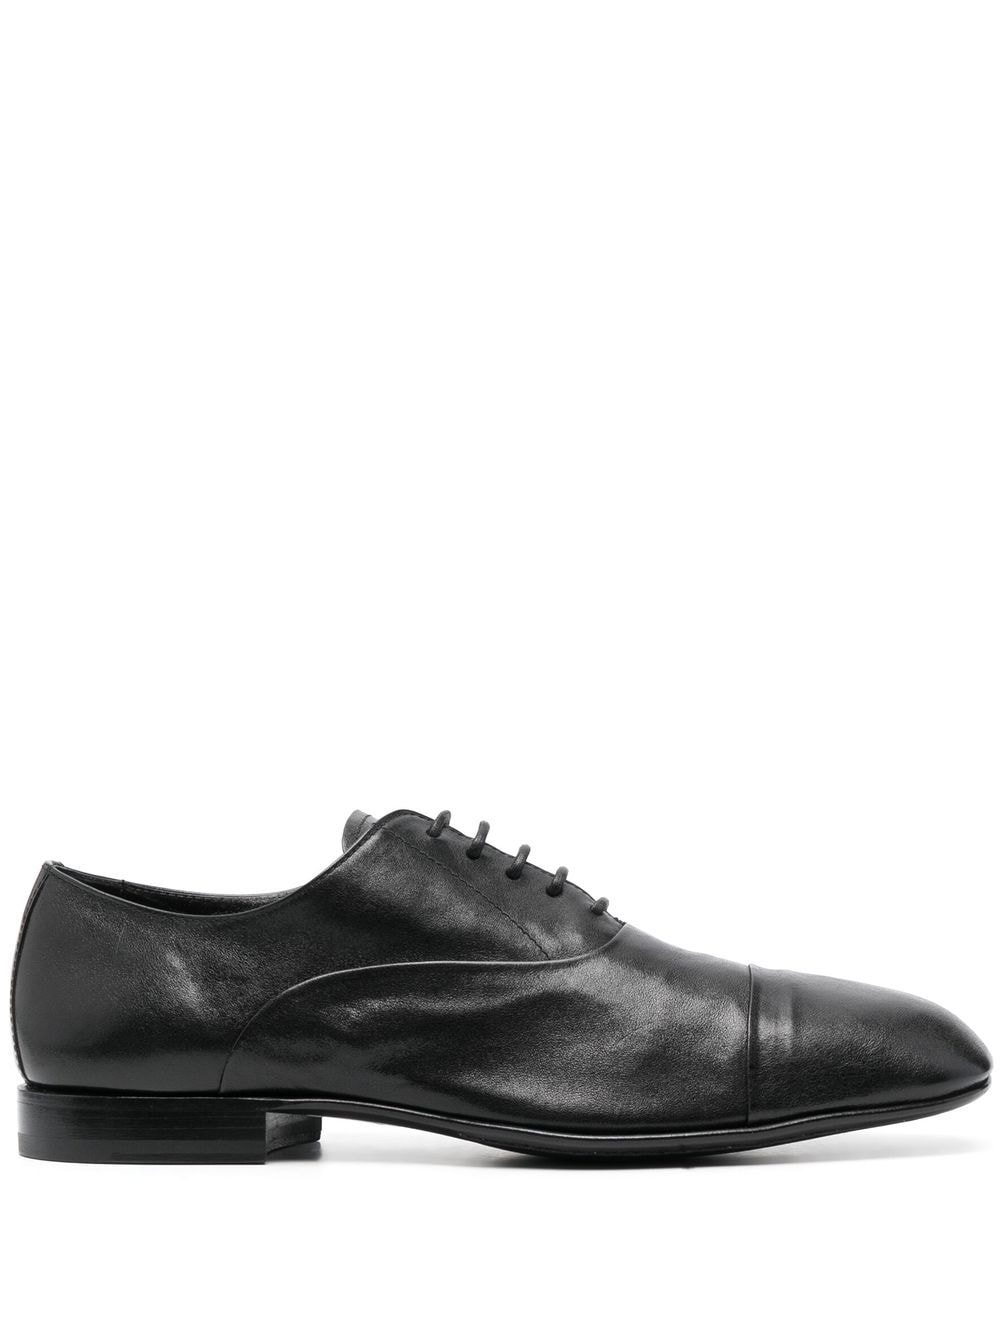 Officine Creative Harvey Leather Oxford Shoes - Farfetch